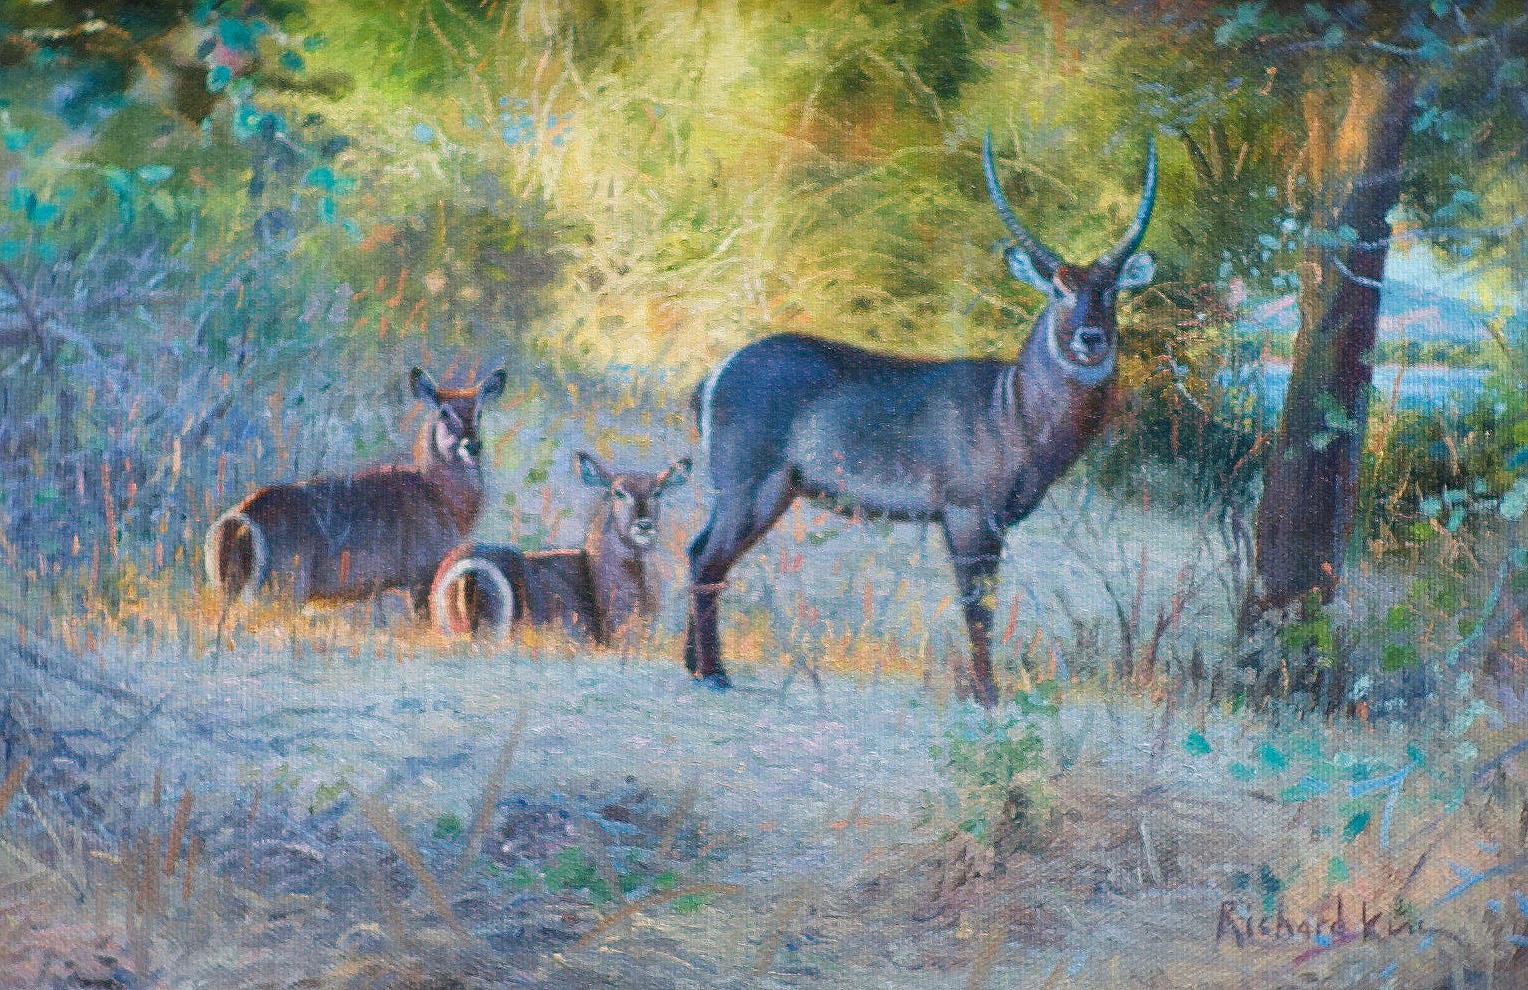 Richard King  Animal Painting - Morning Chores - Wildlife, Realist, Contemporary, 21st Century